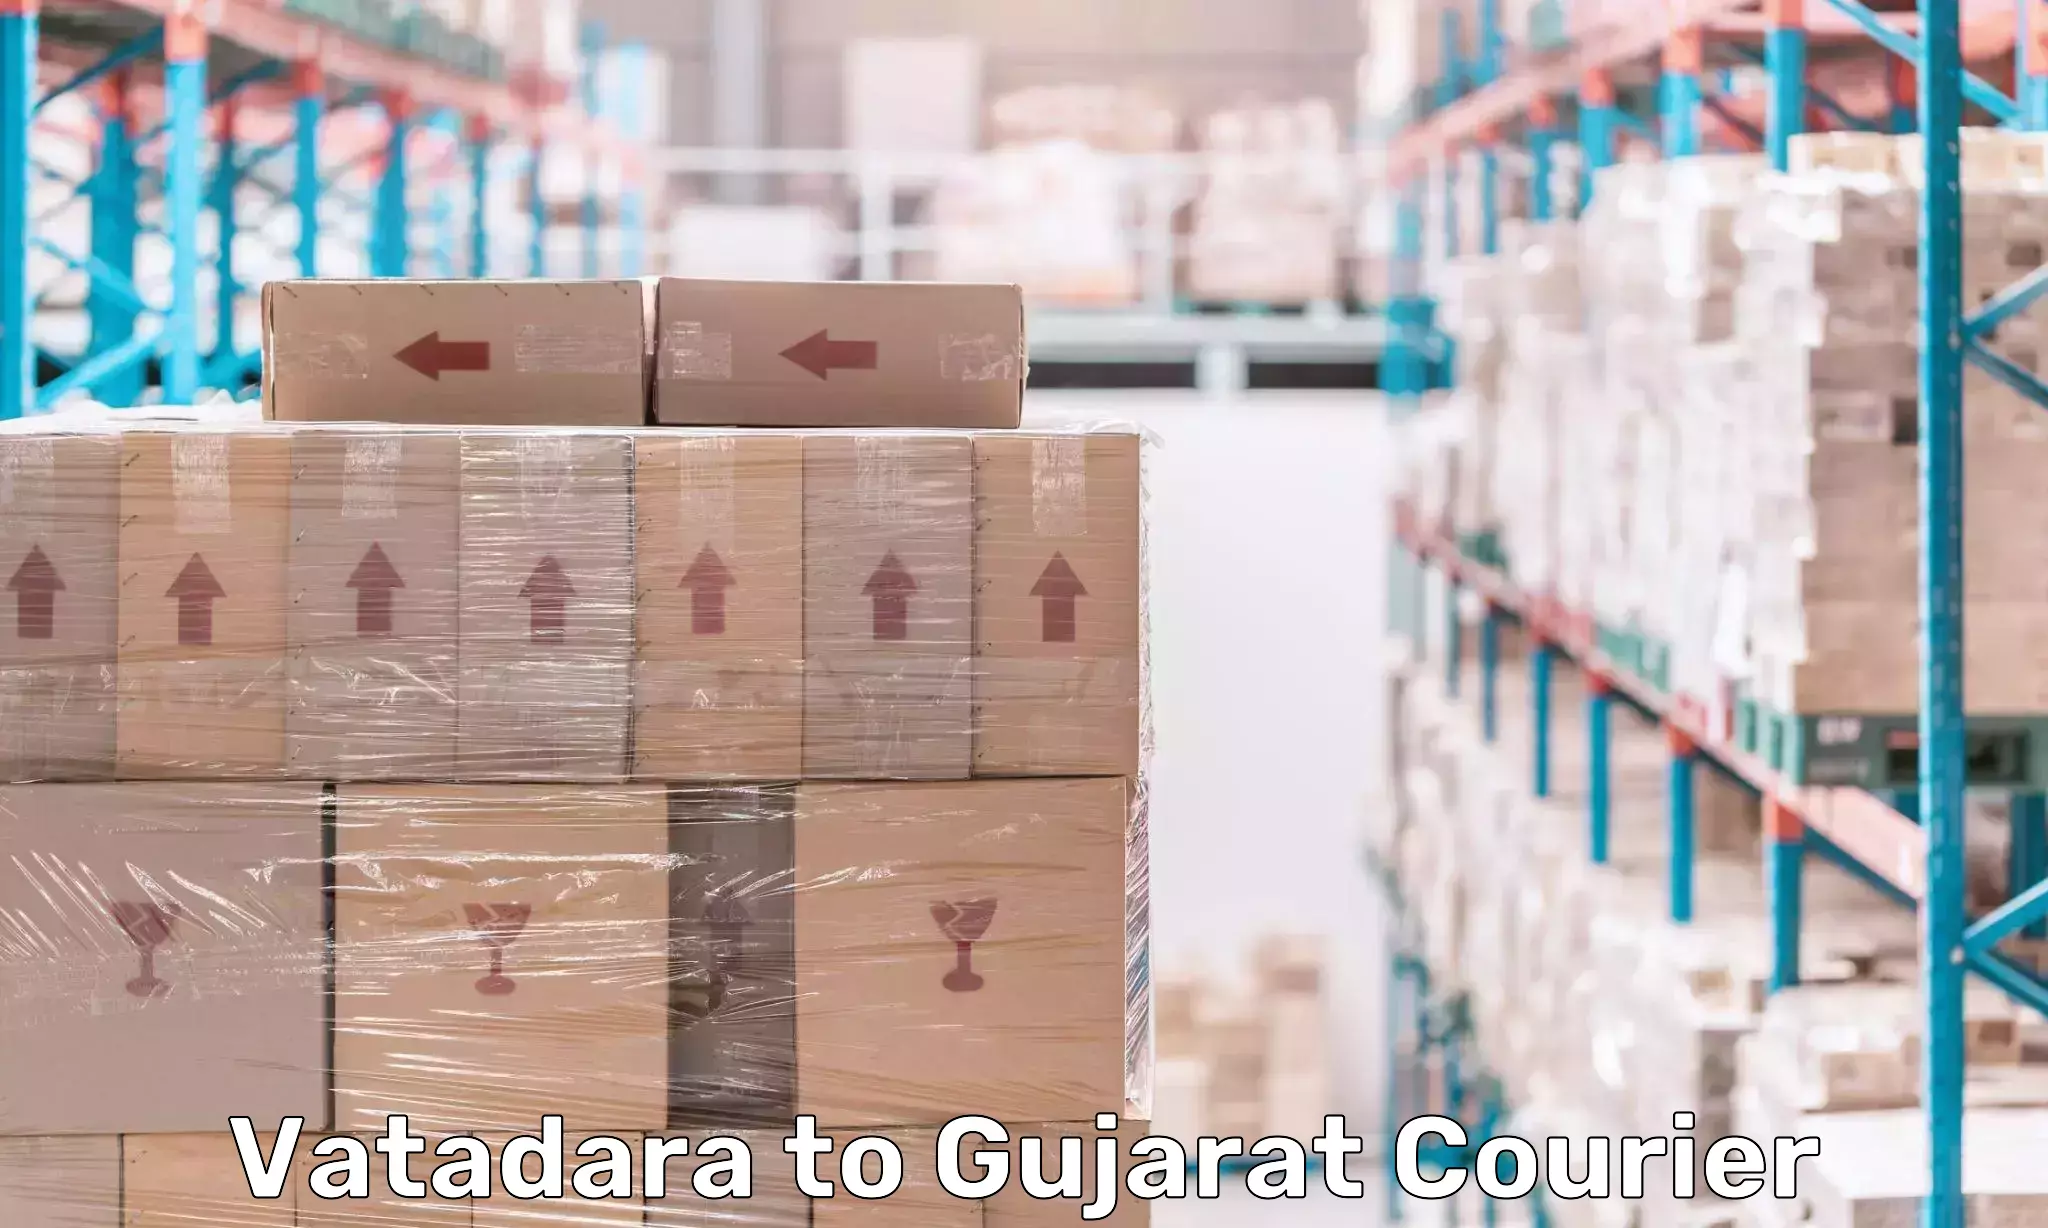 Urgent courier needs Vatadara to Tharad